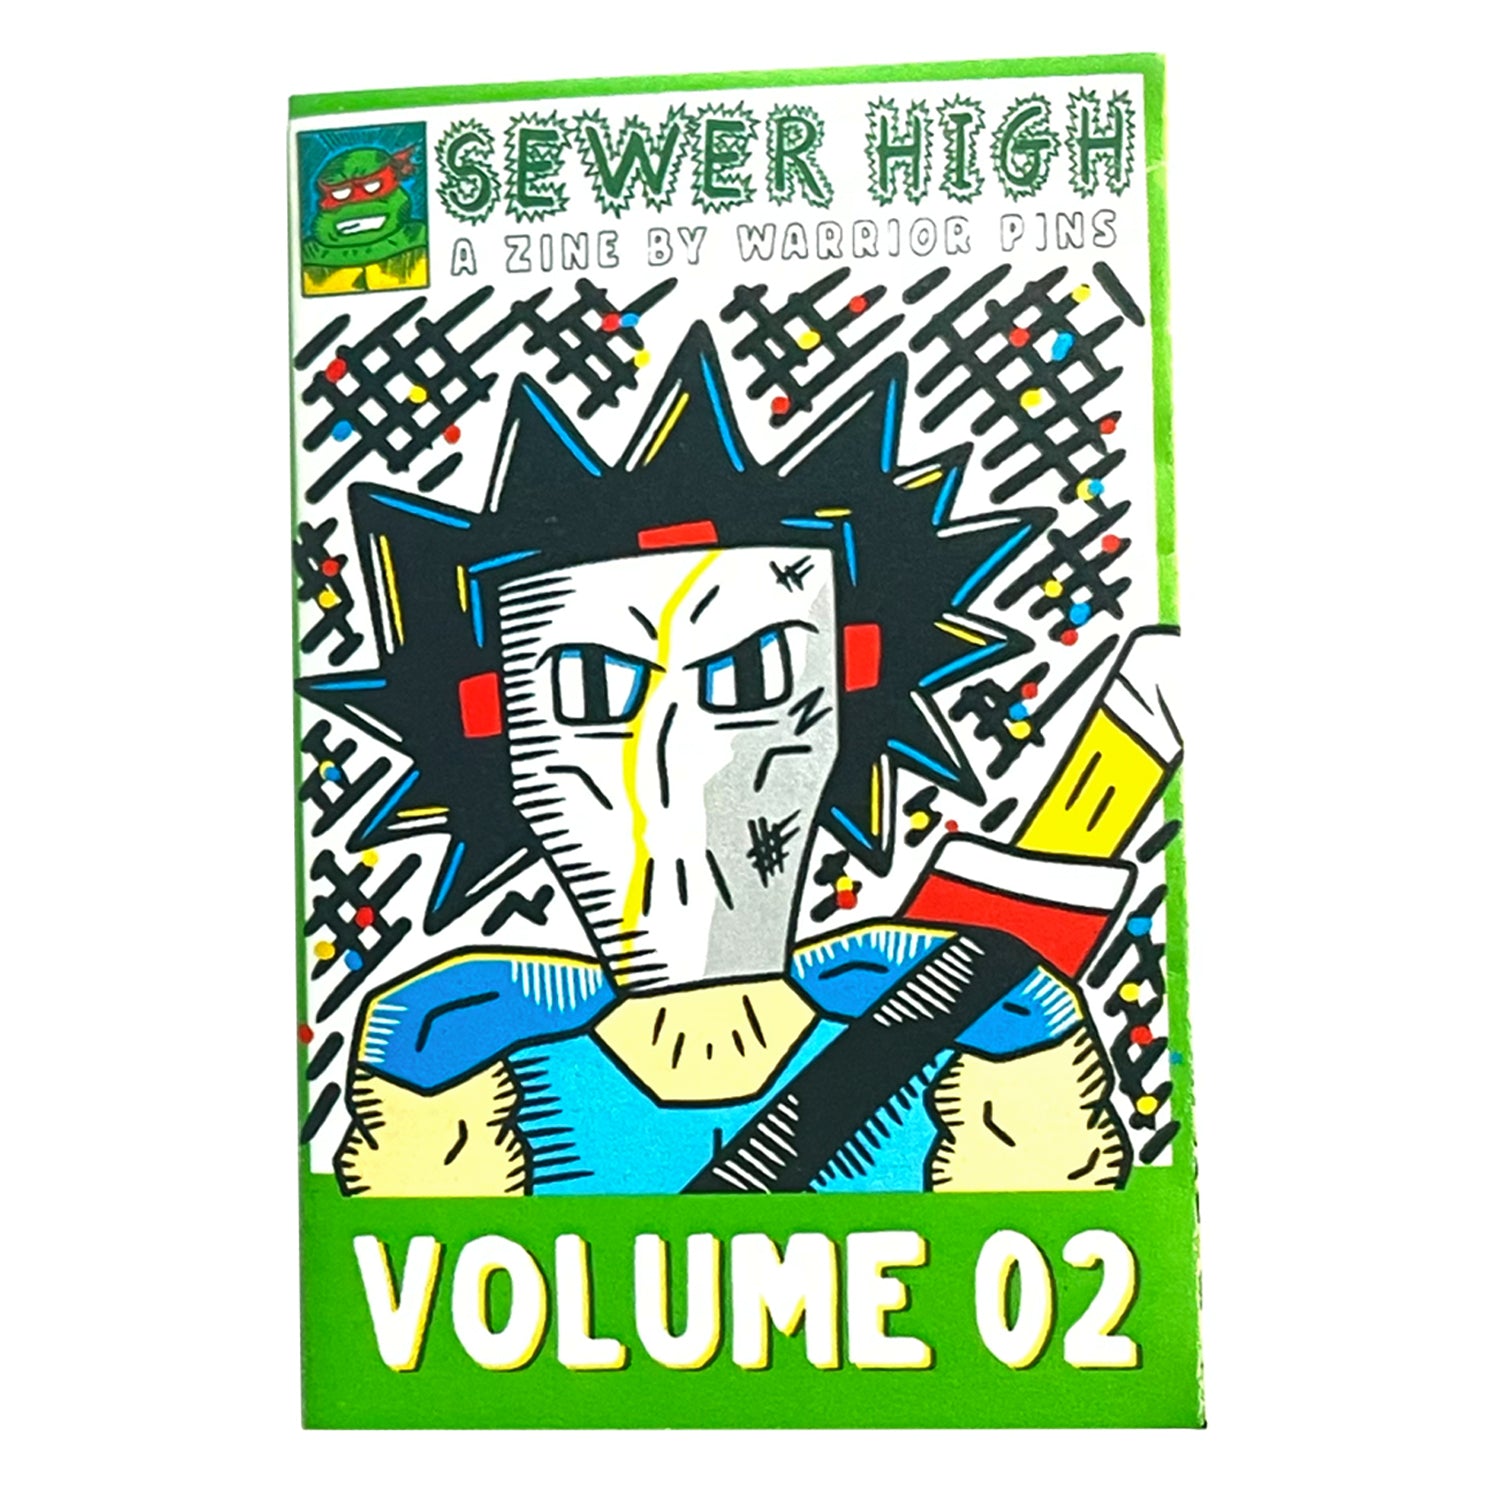 Sewer High Zine - Volume 2